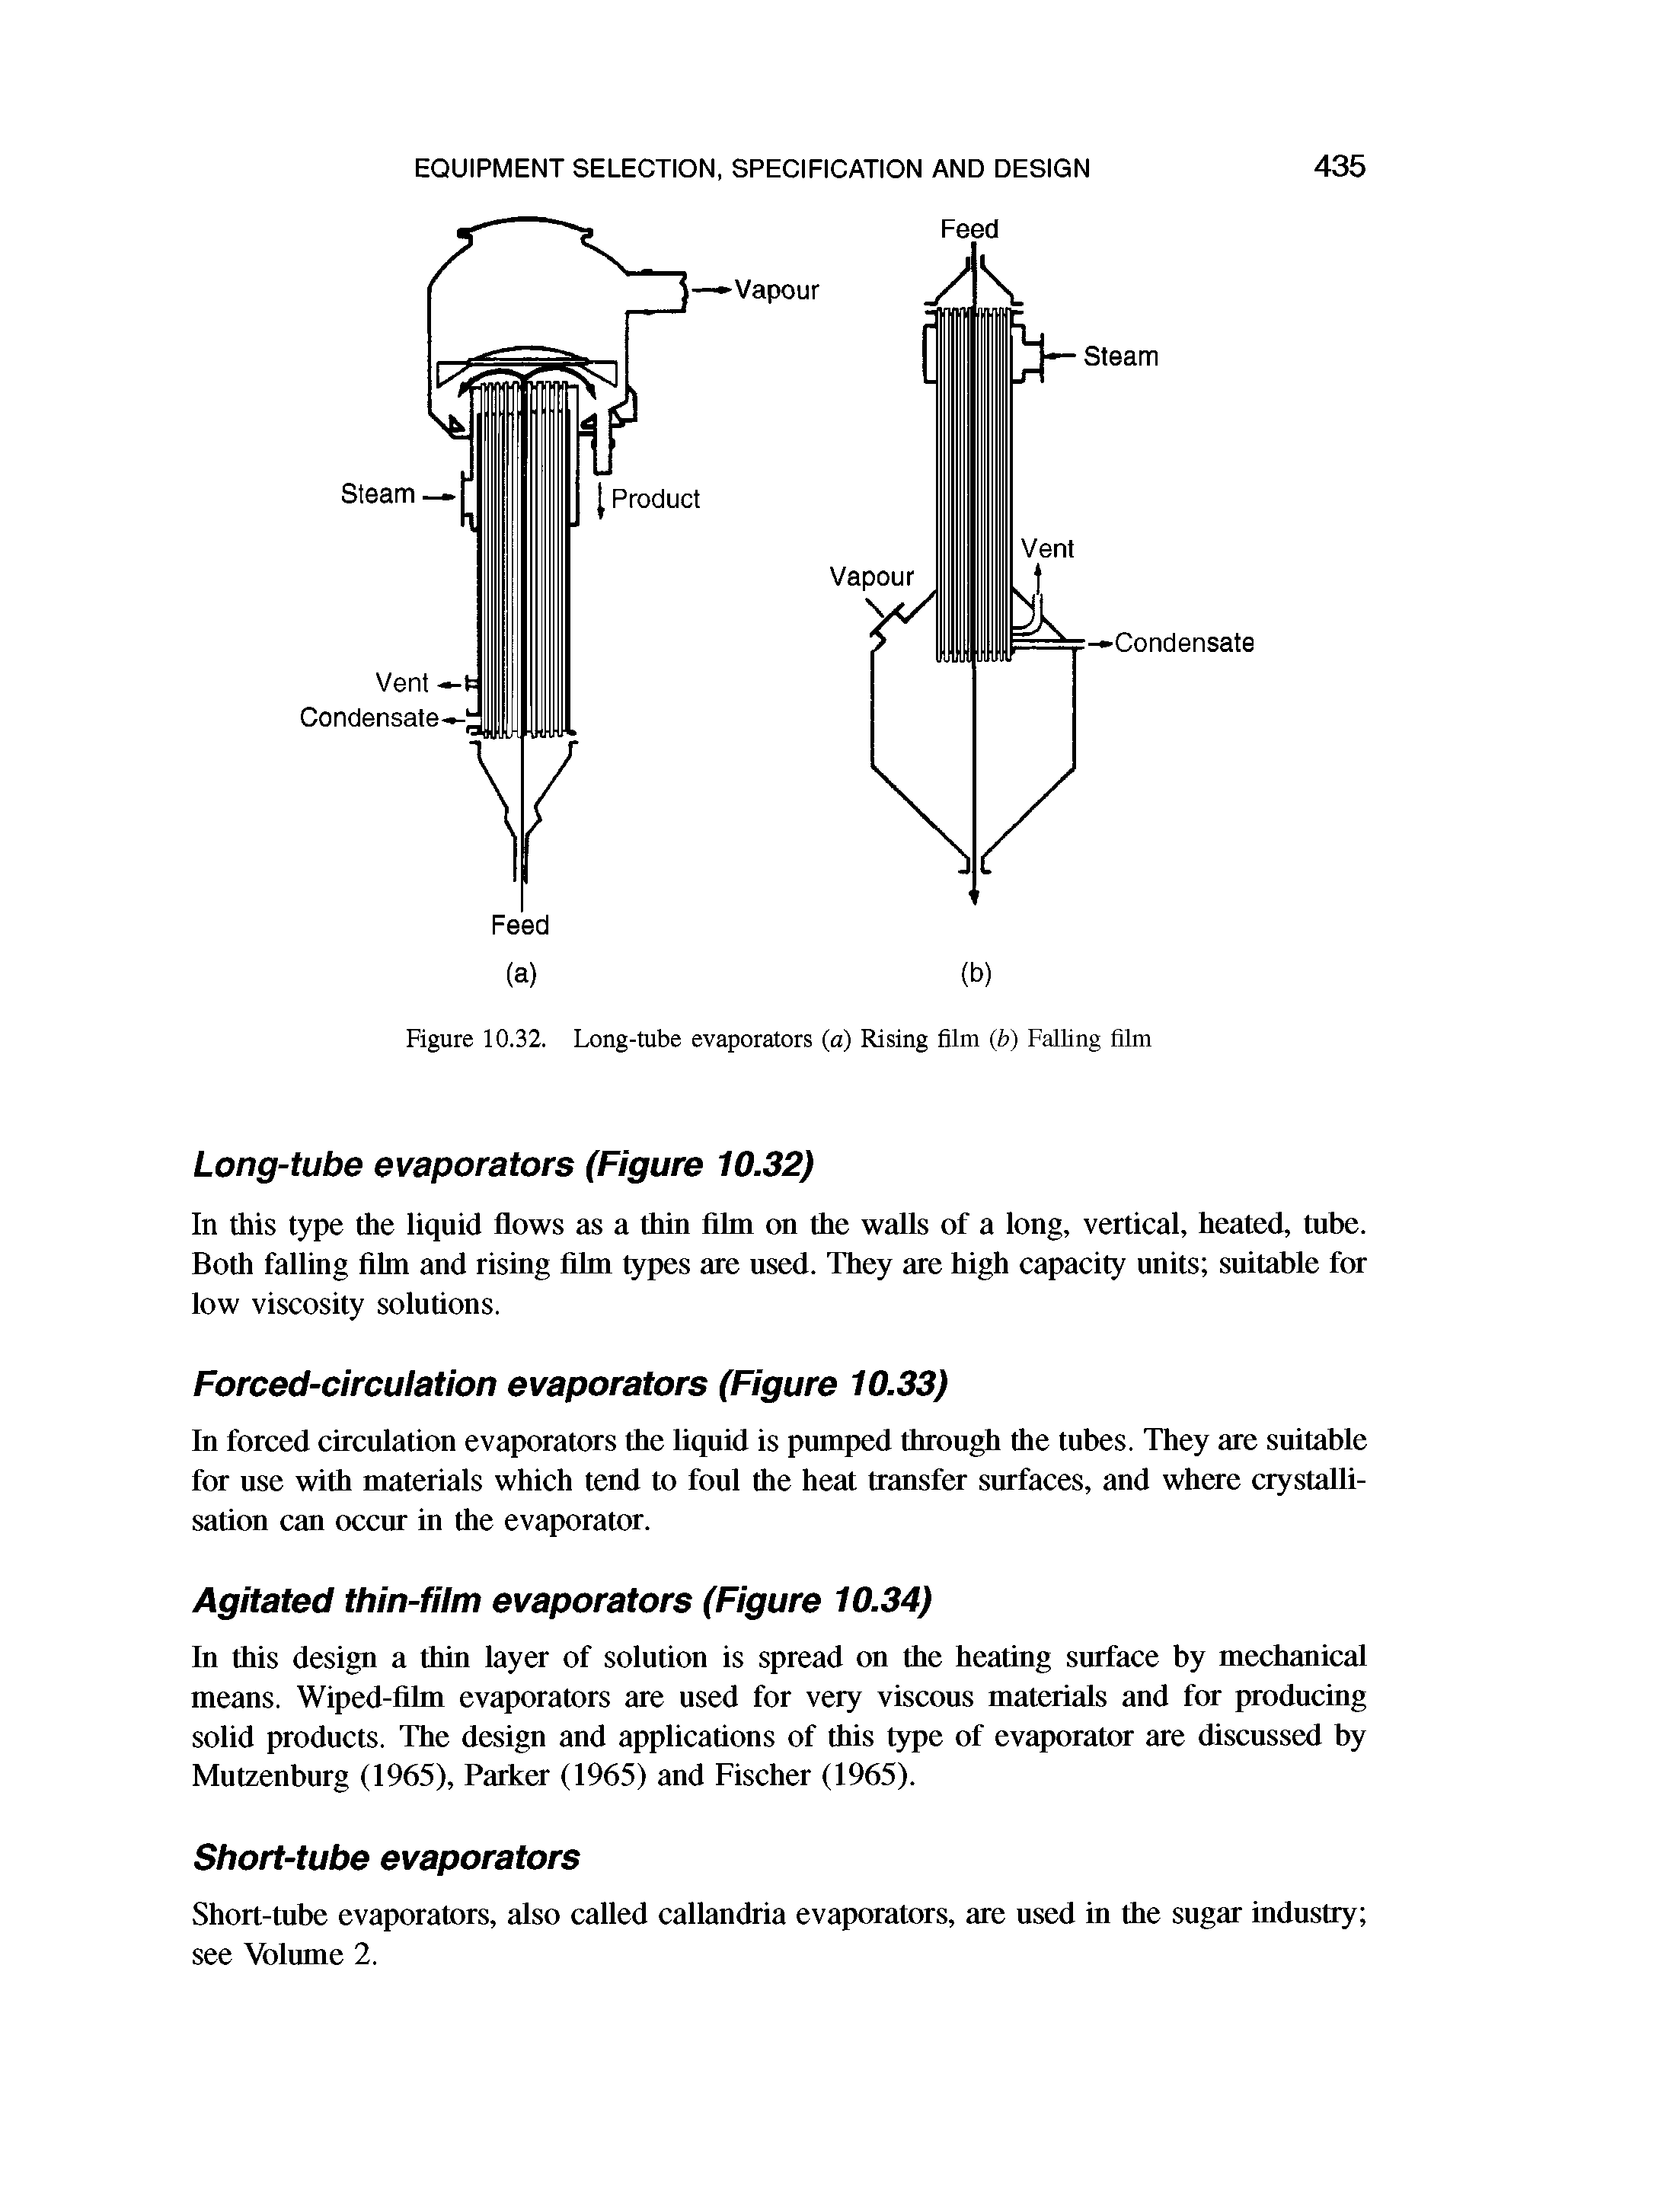 Figure 10.32. Long-tube evaporators (a) Rising film (b) Falling film...